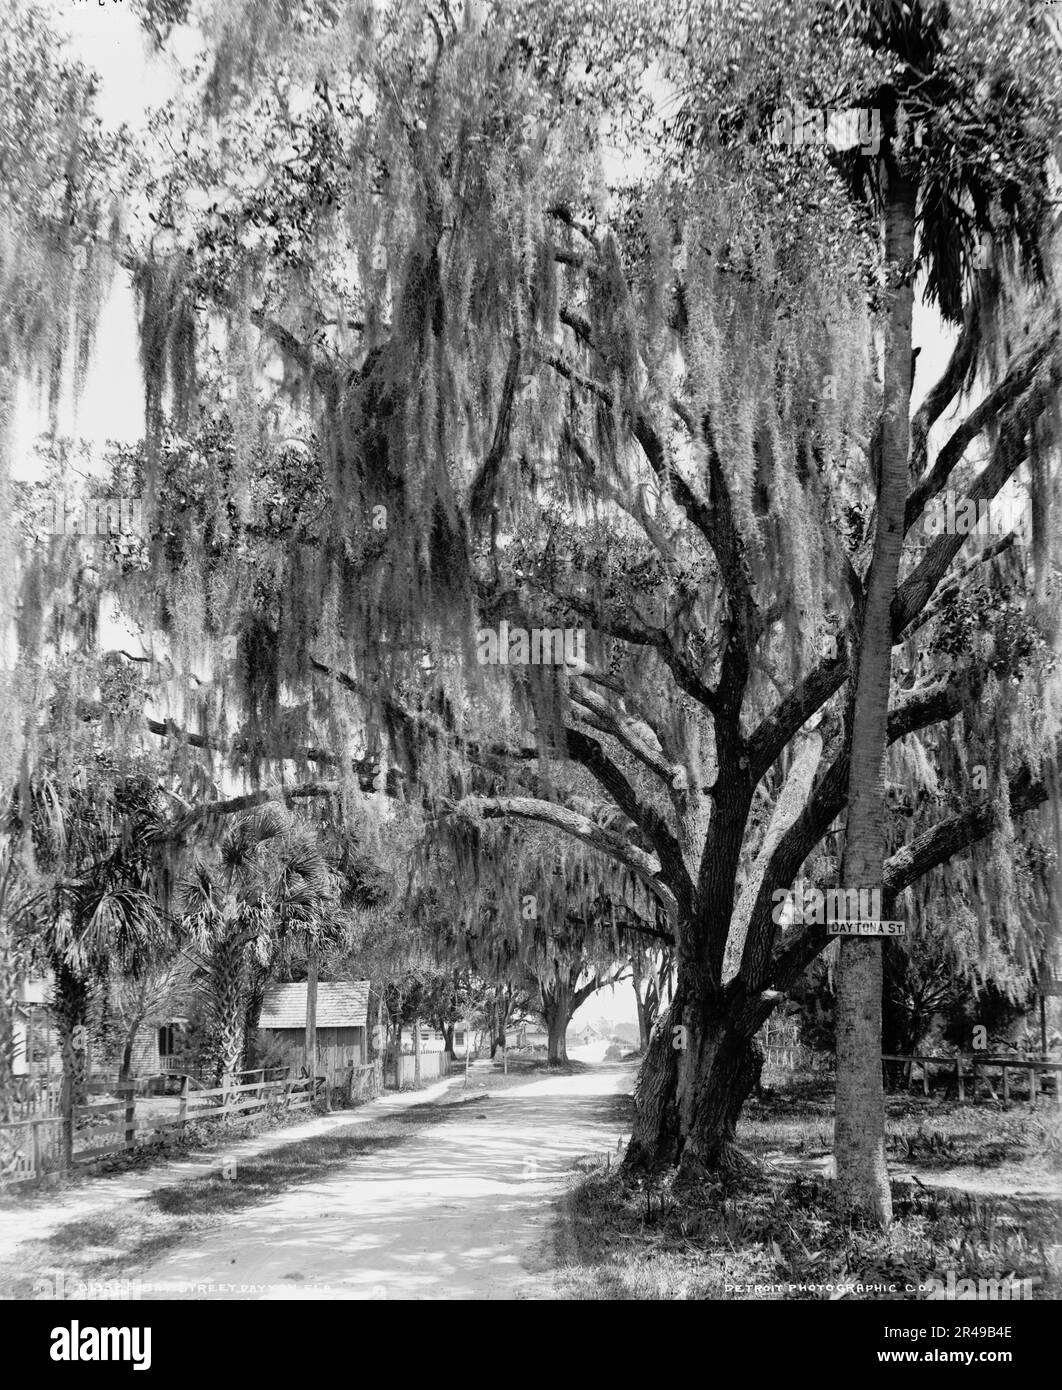 Bay Street, Dayton[a], Fla., between 1900 and 1906. Sign on tree: Daytona St. Stock Photo